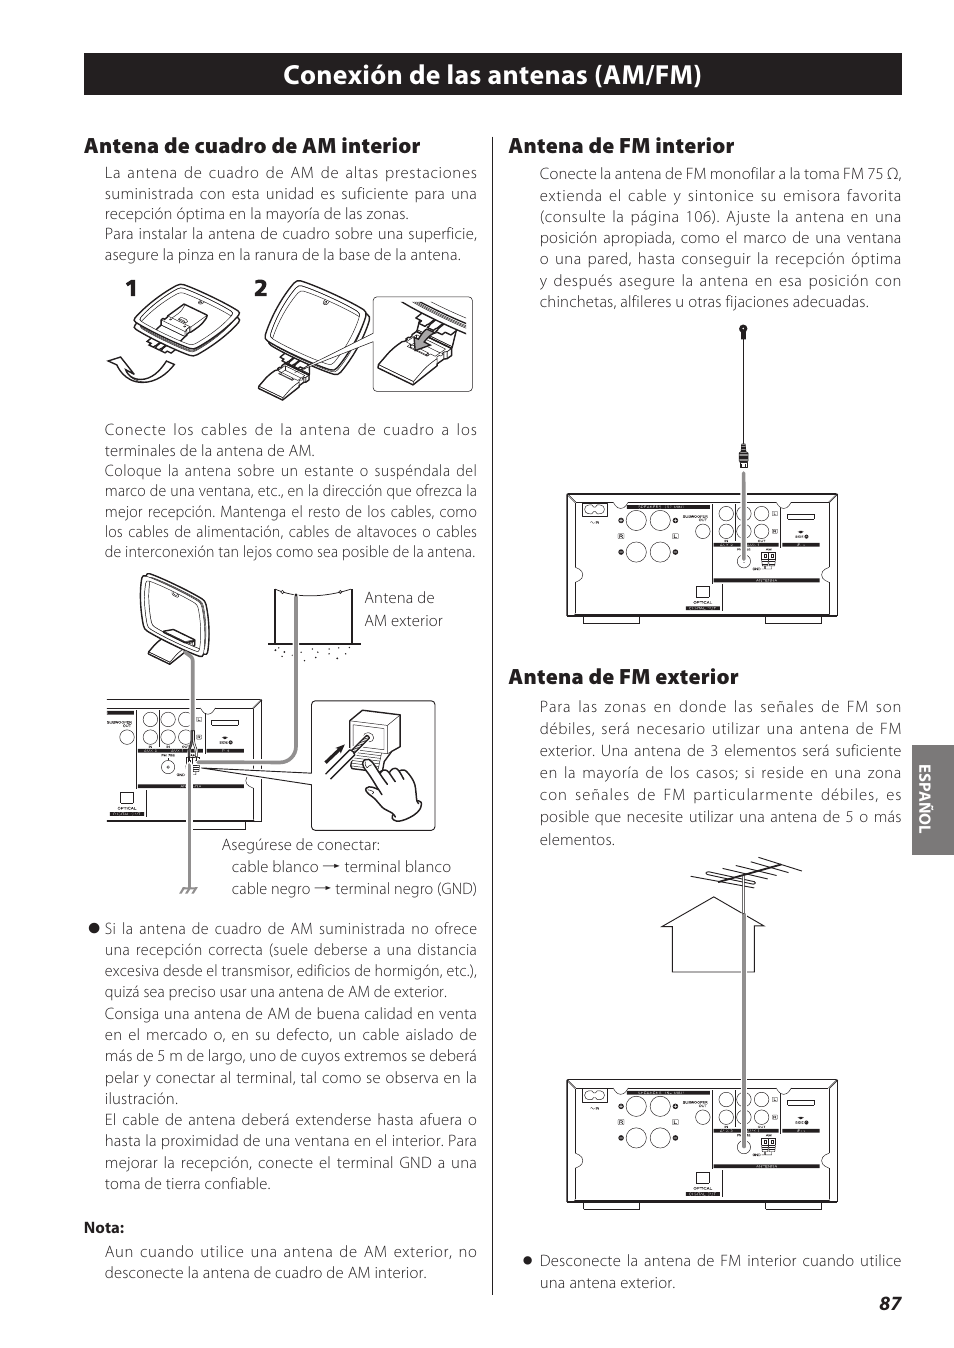 Conexión de las antenas (am/fm), Antena de cuadro de am interior, Antena de fm interior | Antena de fm exterior | Teac CD Receiver CR-H238i User Manual | Page 87 / 118